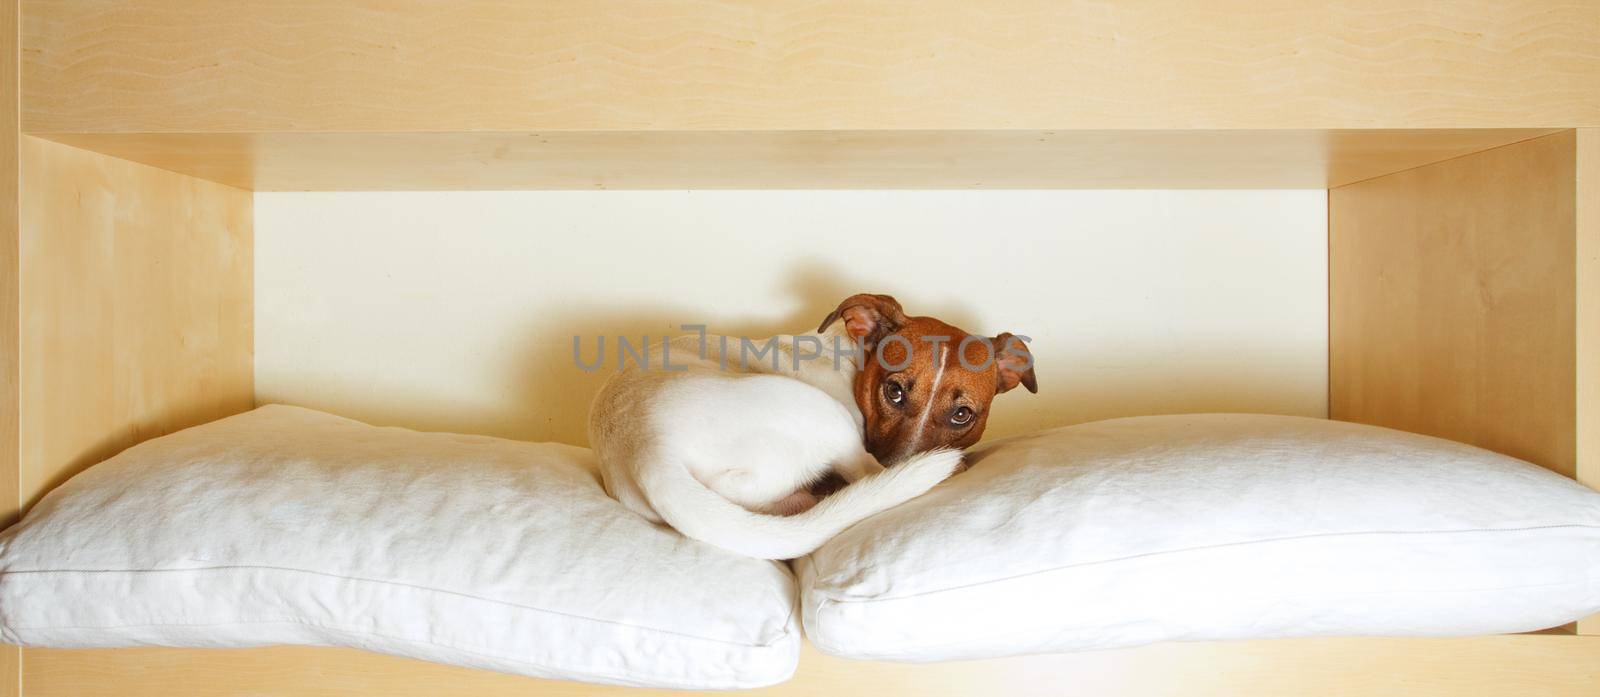 sleepy tried dog in bed by Brosch